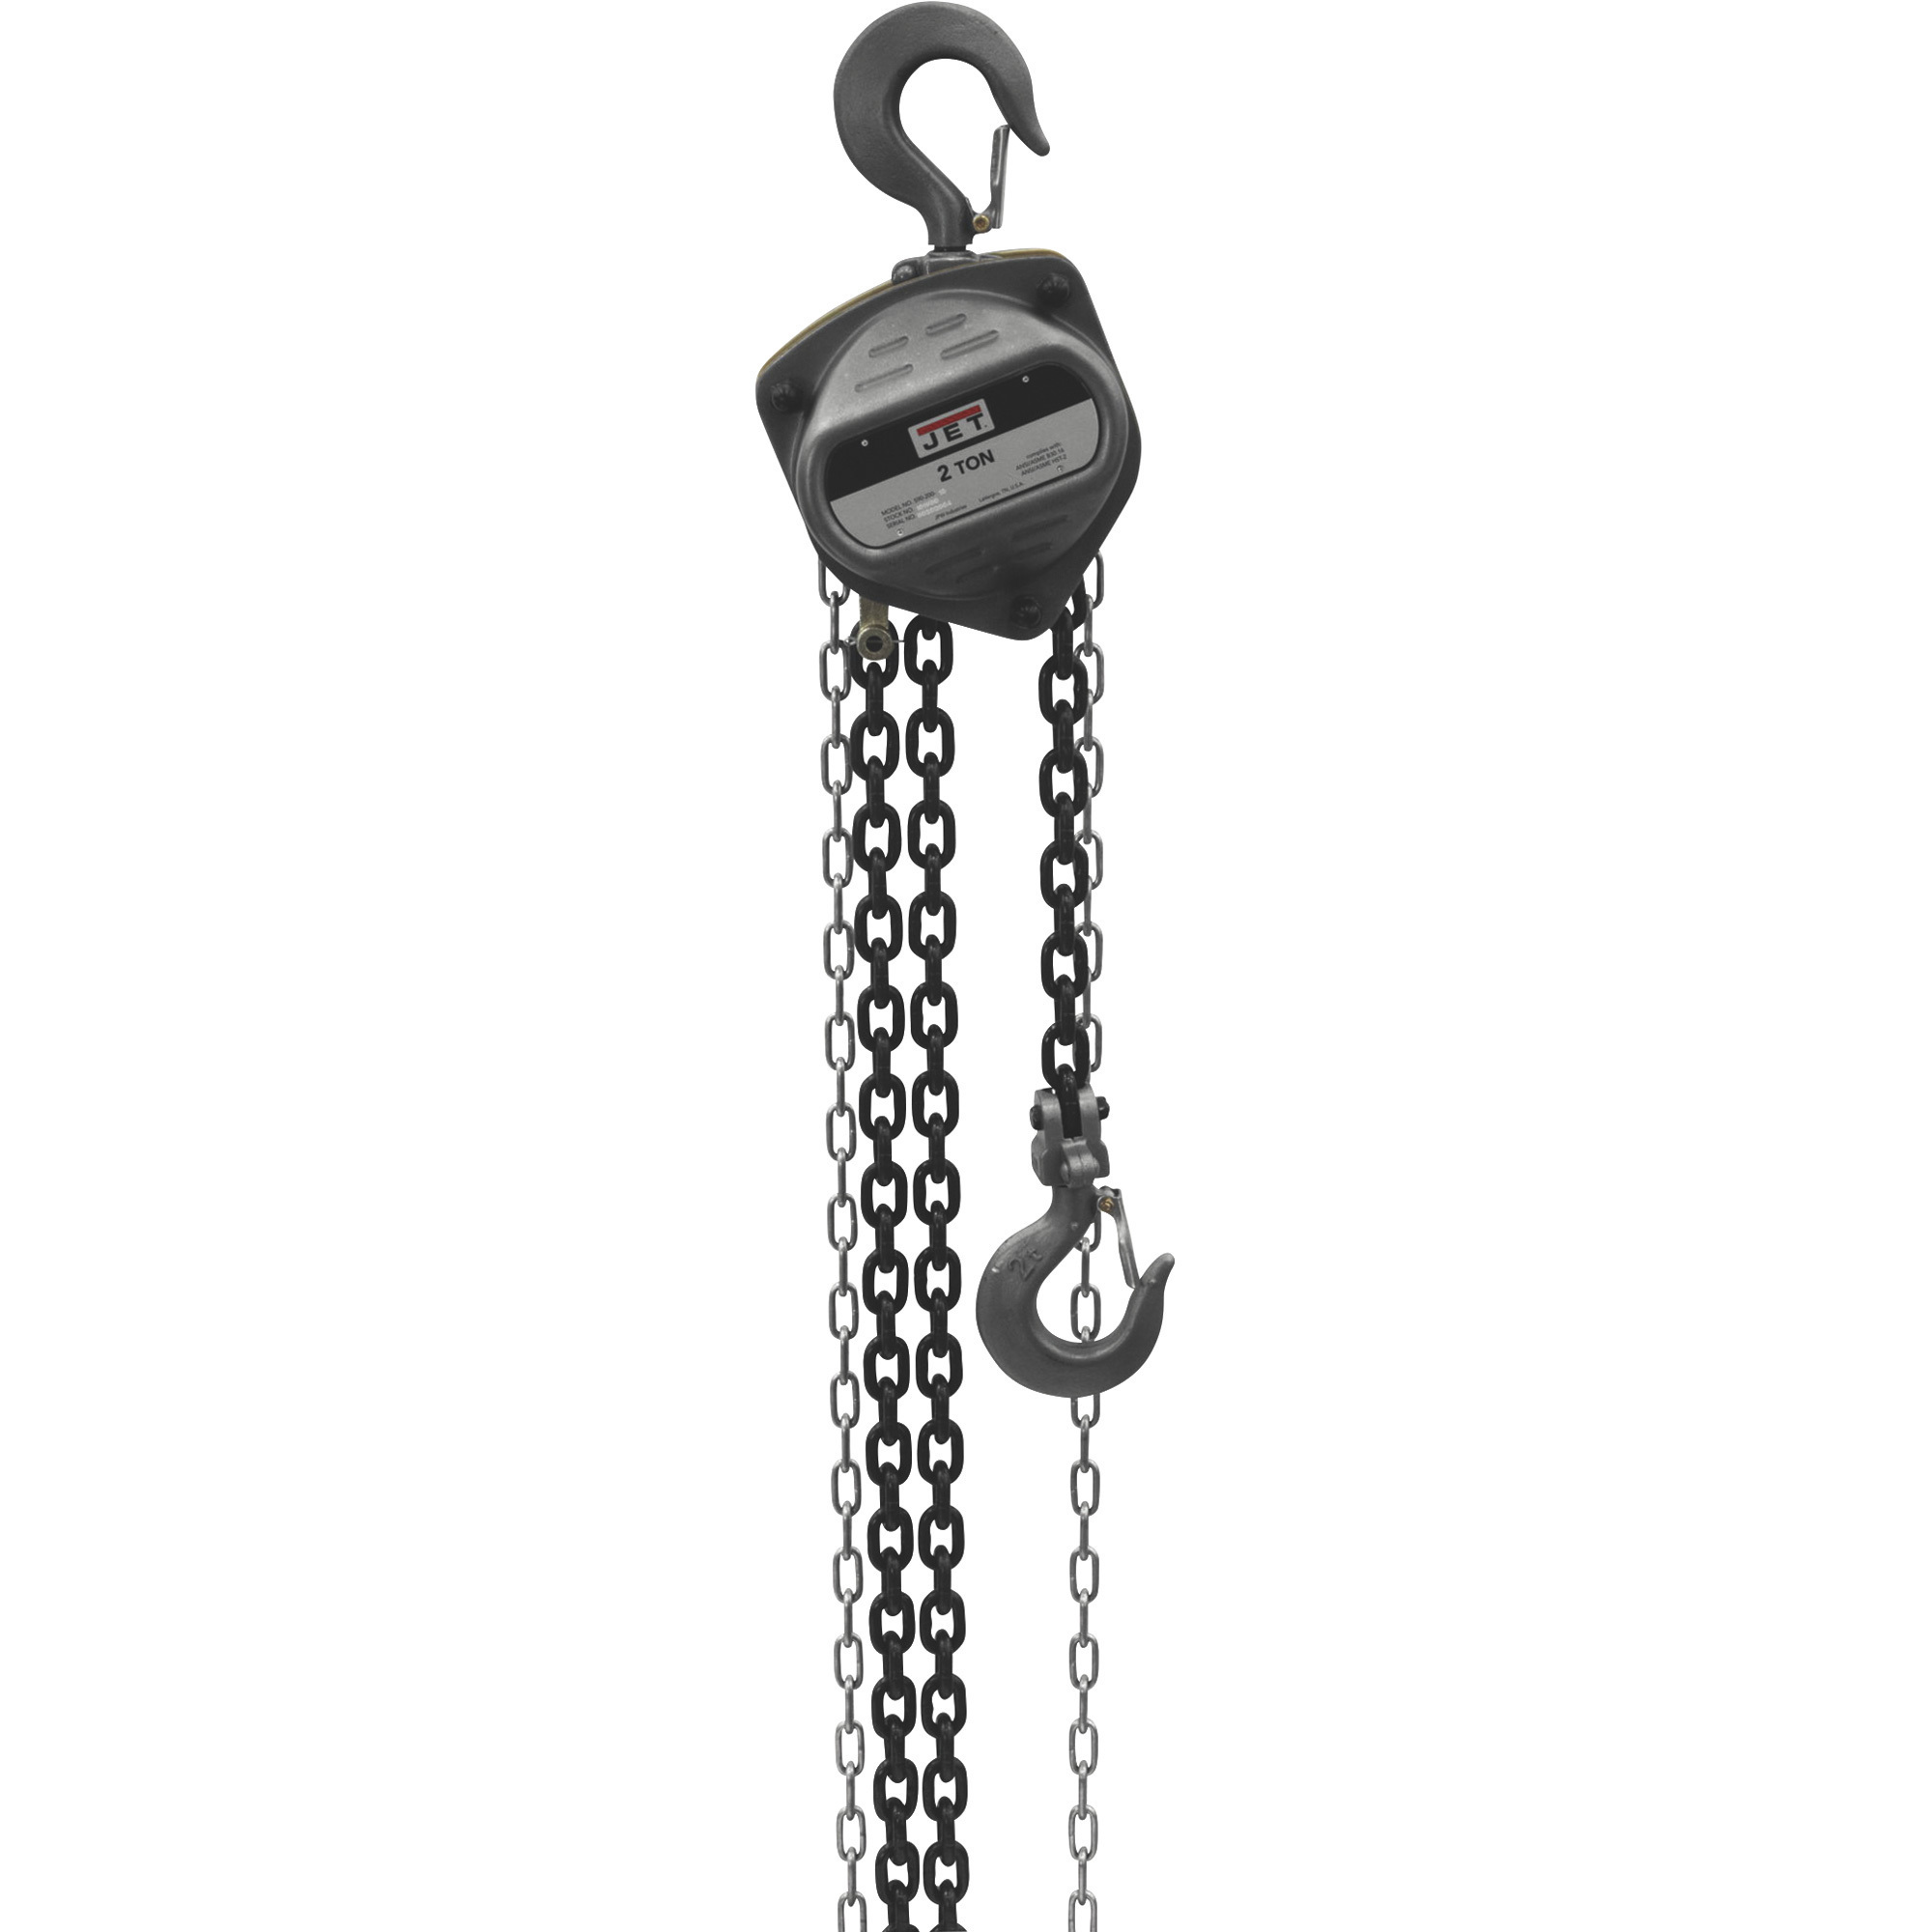 JET S90 Series Manual Chain Hoist, 2-Ton Capacity, 10-ft. Lift, Model S90-200-10